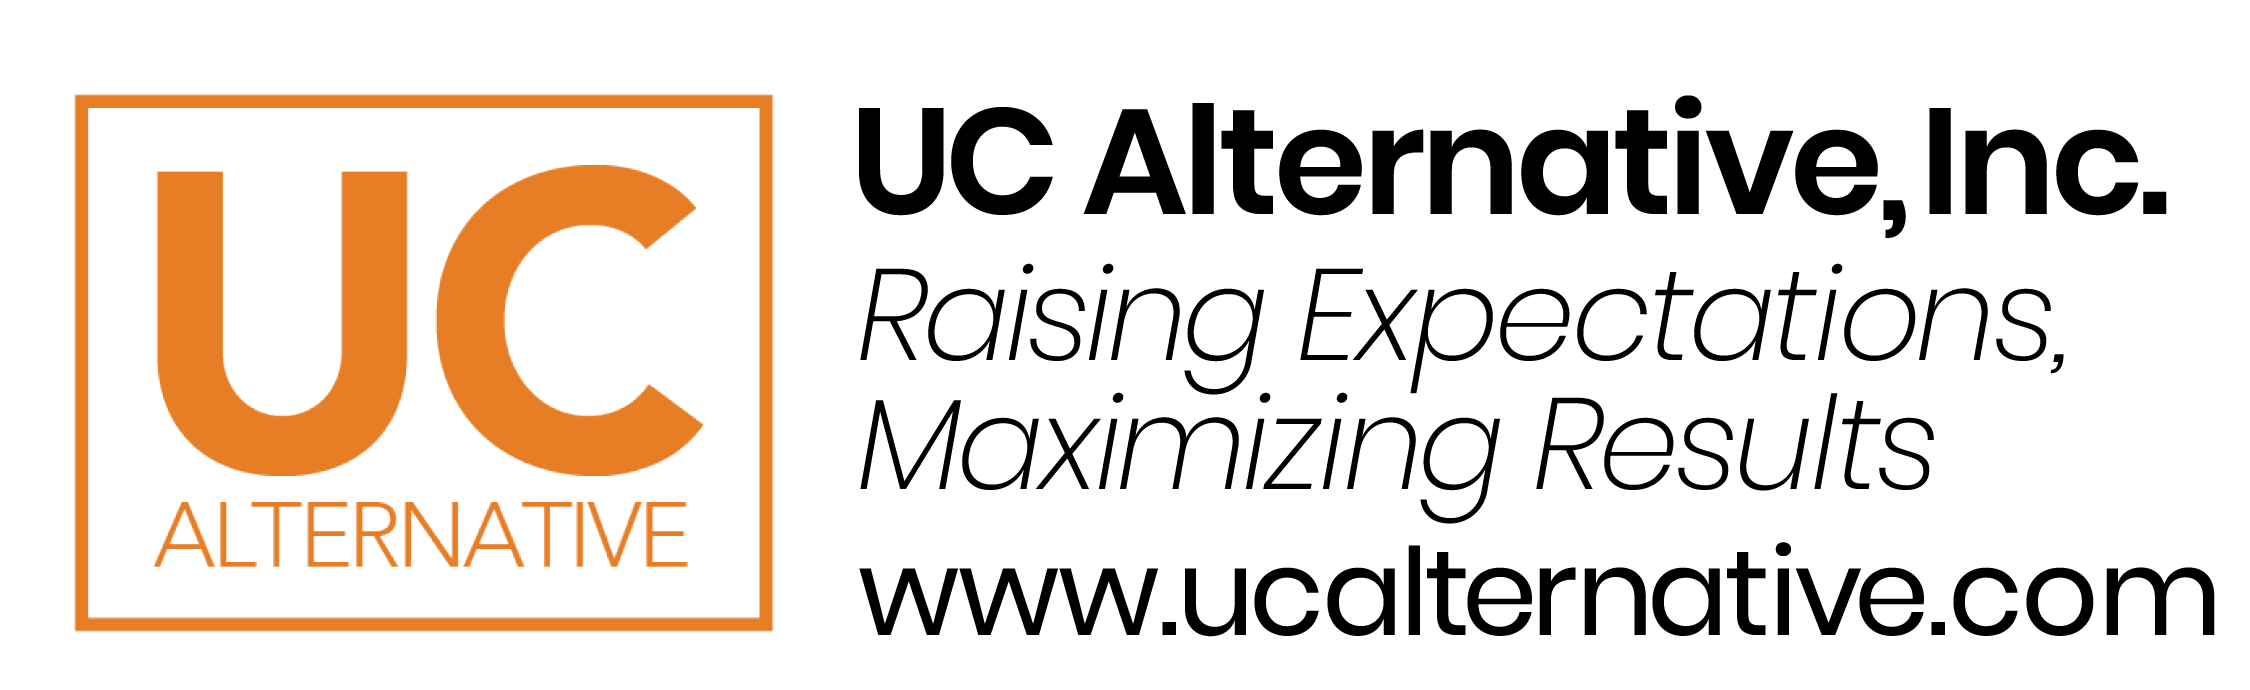 hubspot logo with address  copy trans back 7.8. 2.20pm